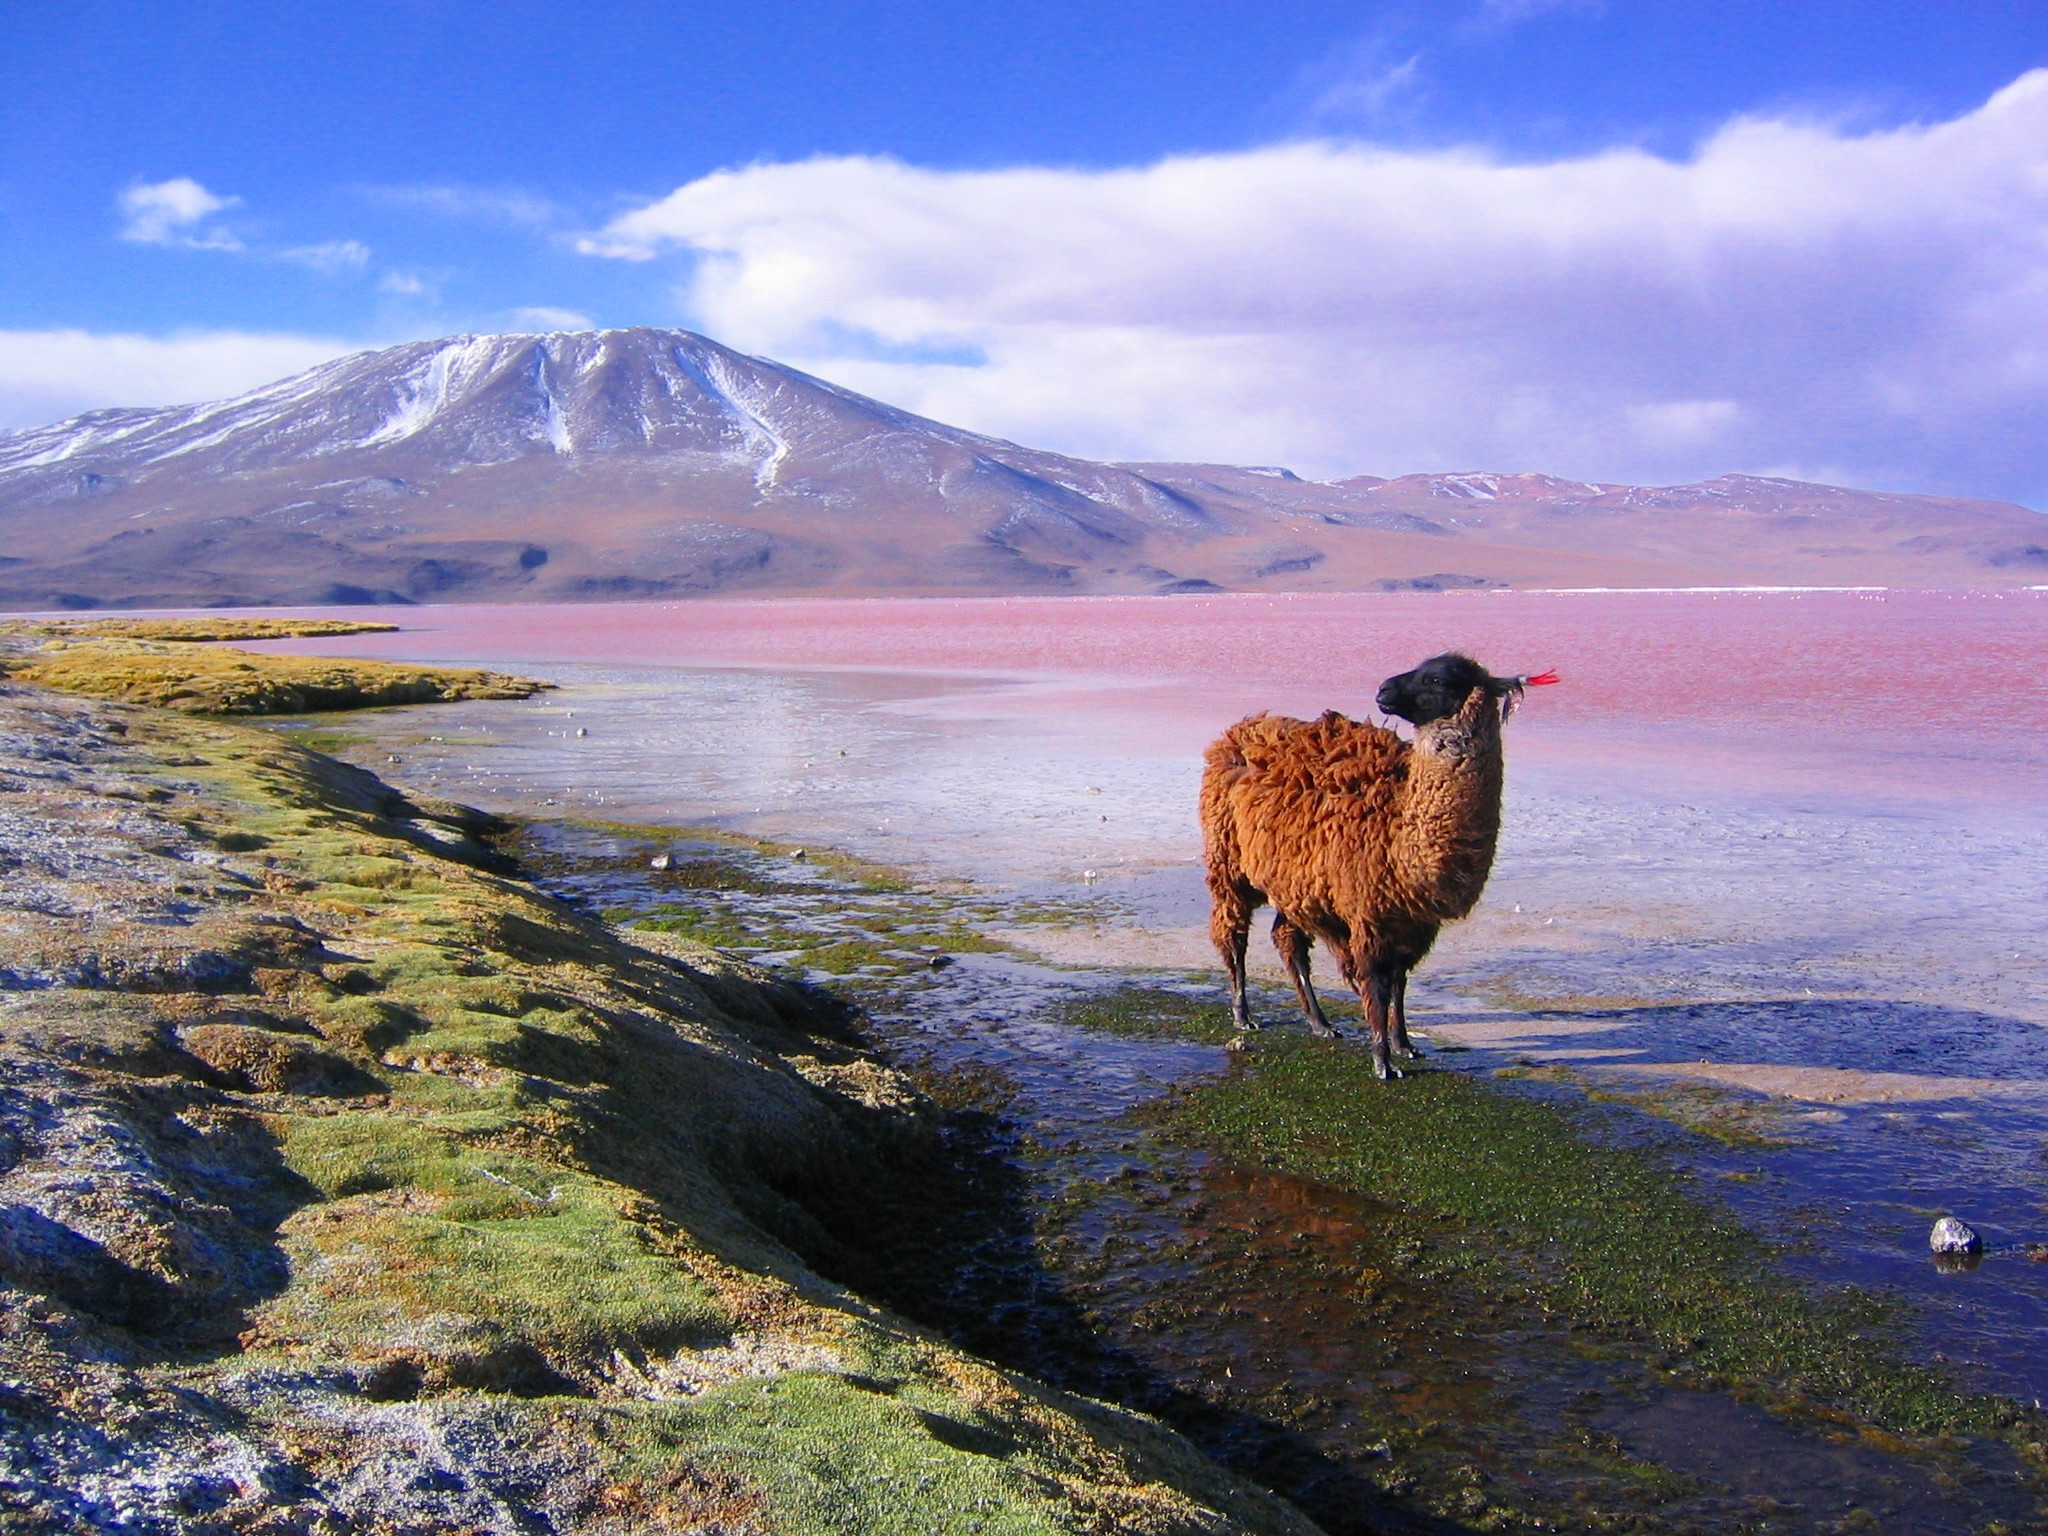 Llama | Bolivia Wildlife Blog